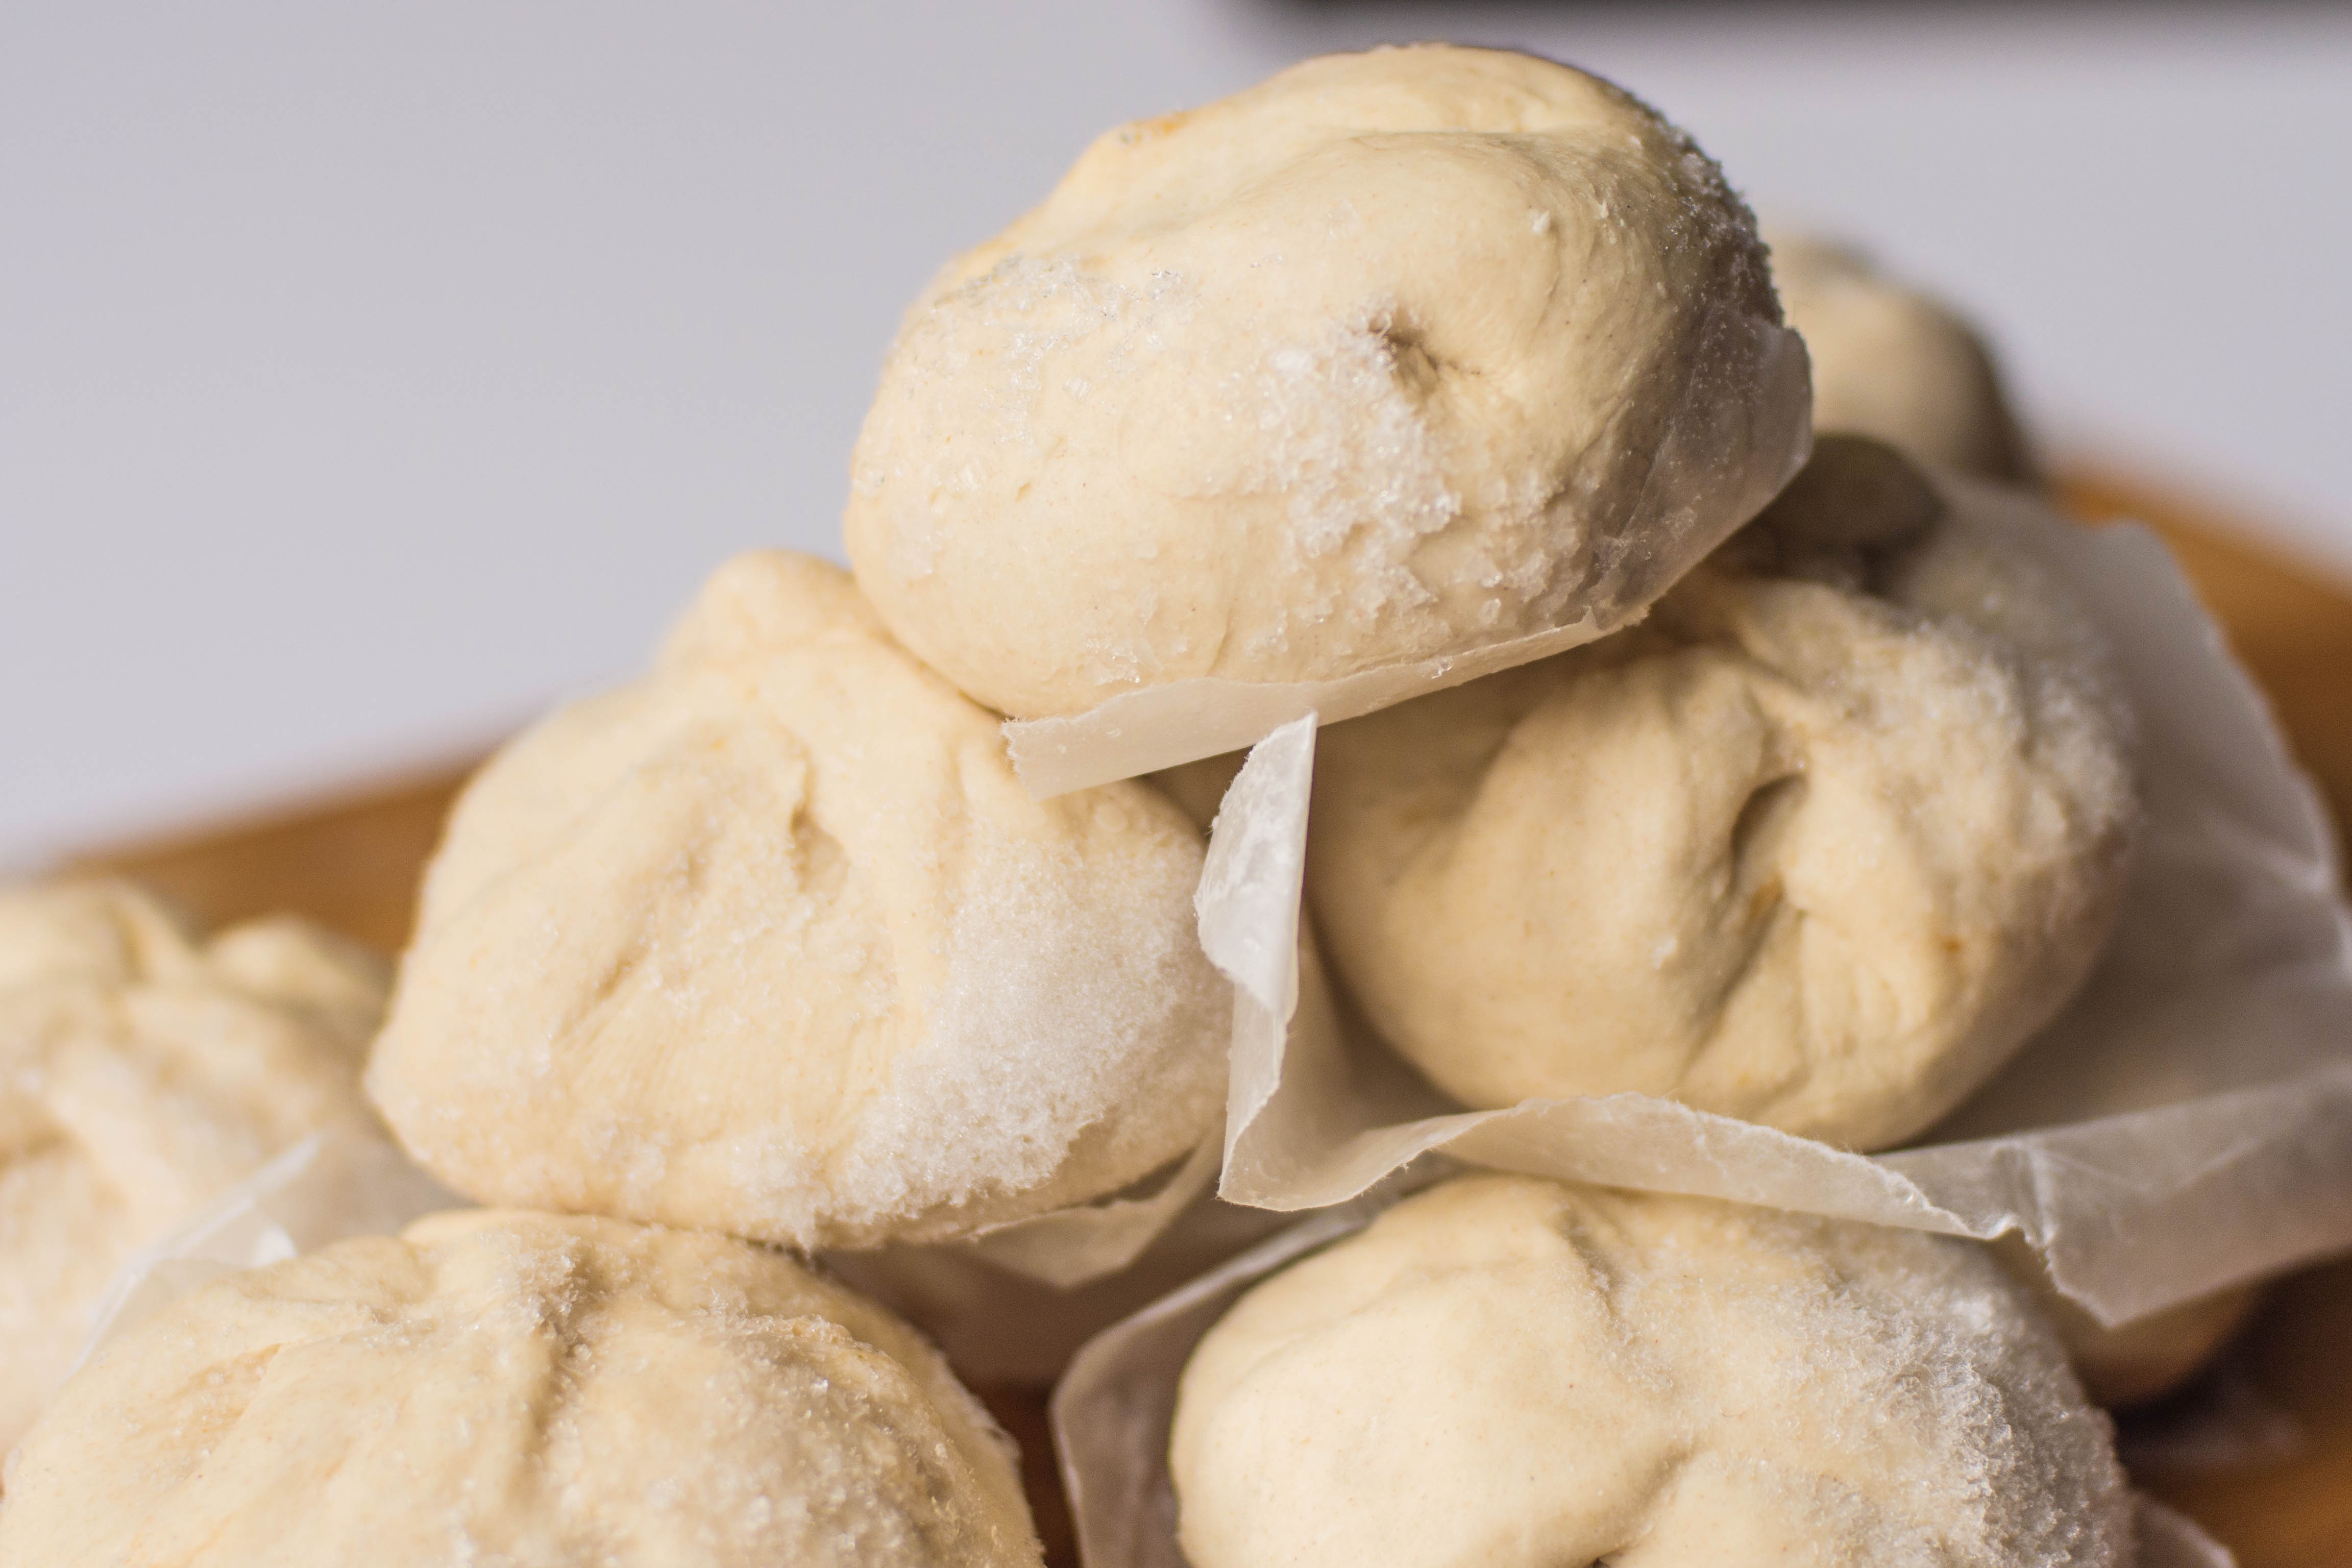 Frozen raw dough for buns free image